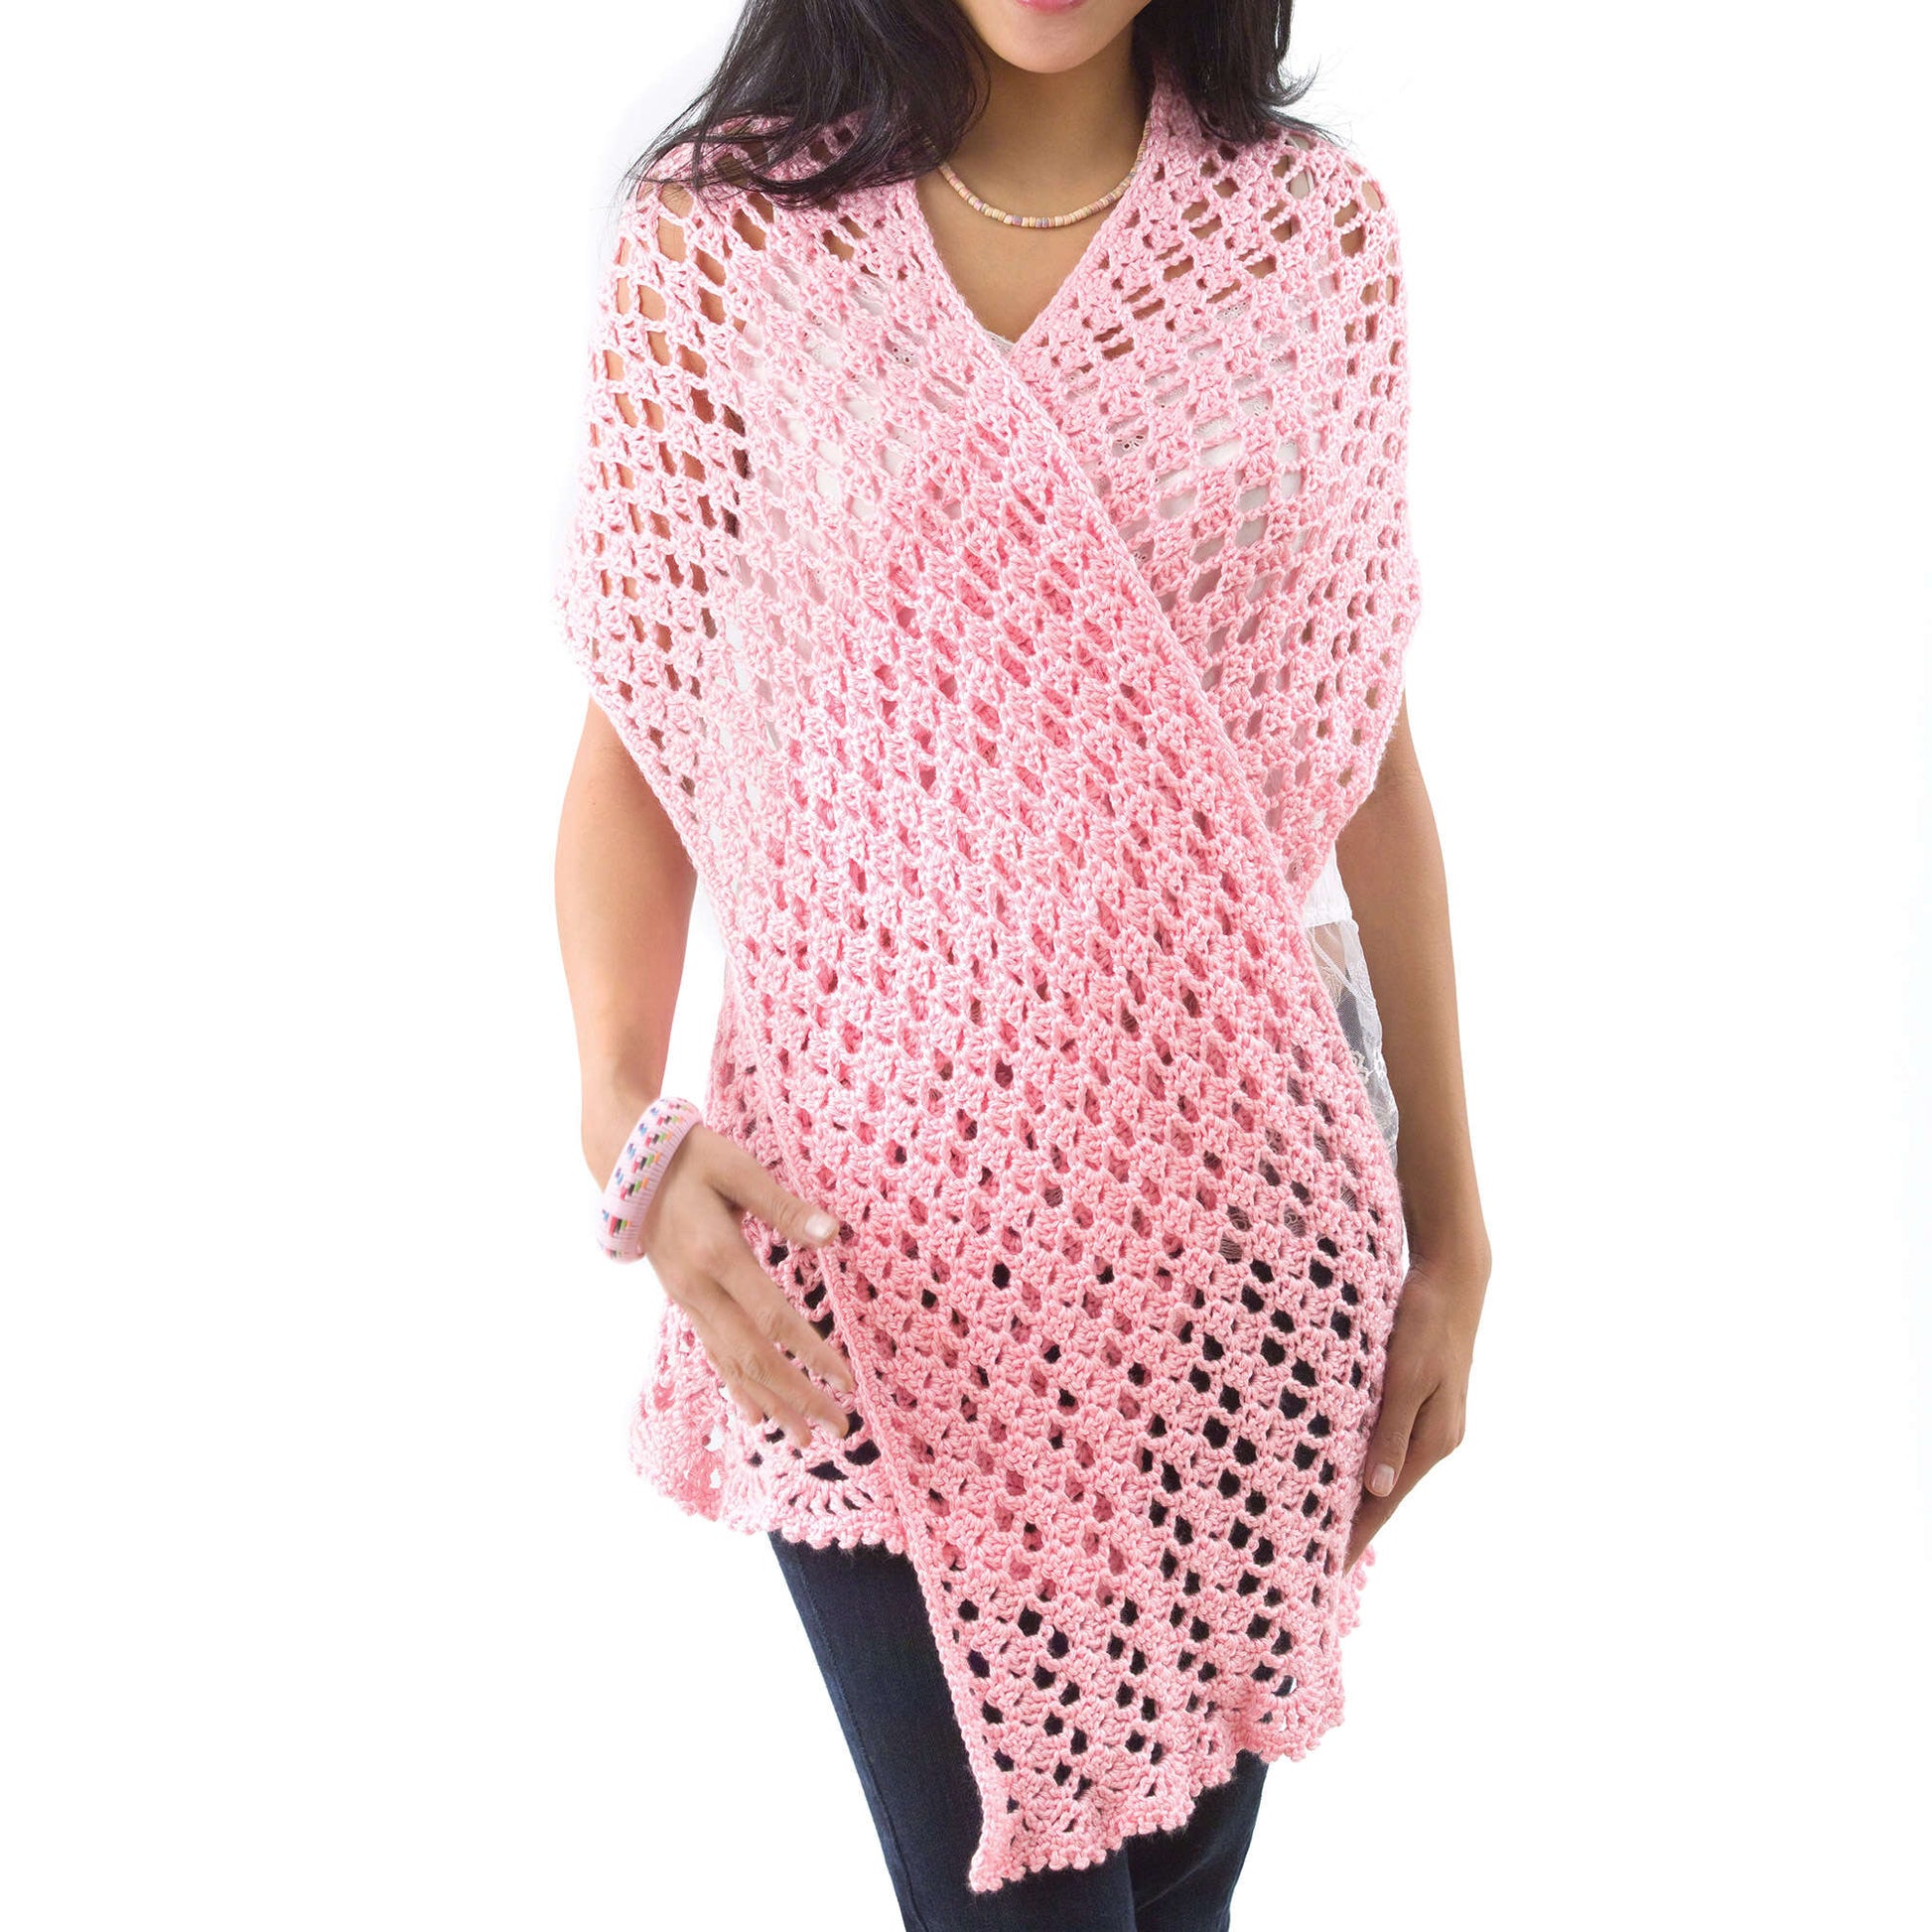 Free Caron Crochet "Pink Ribbon" Shawl Pattern